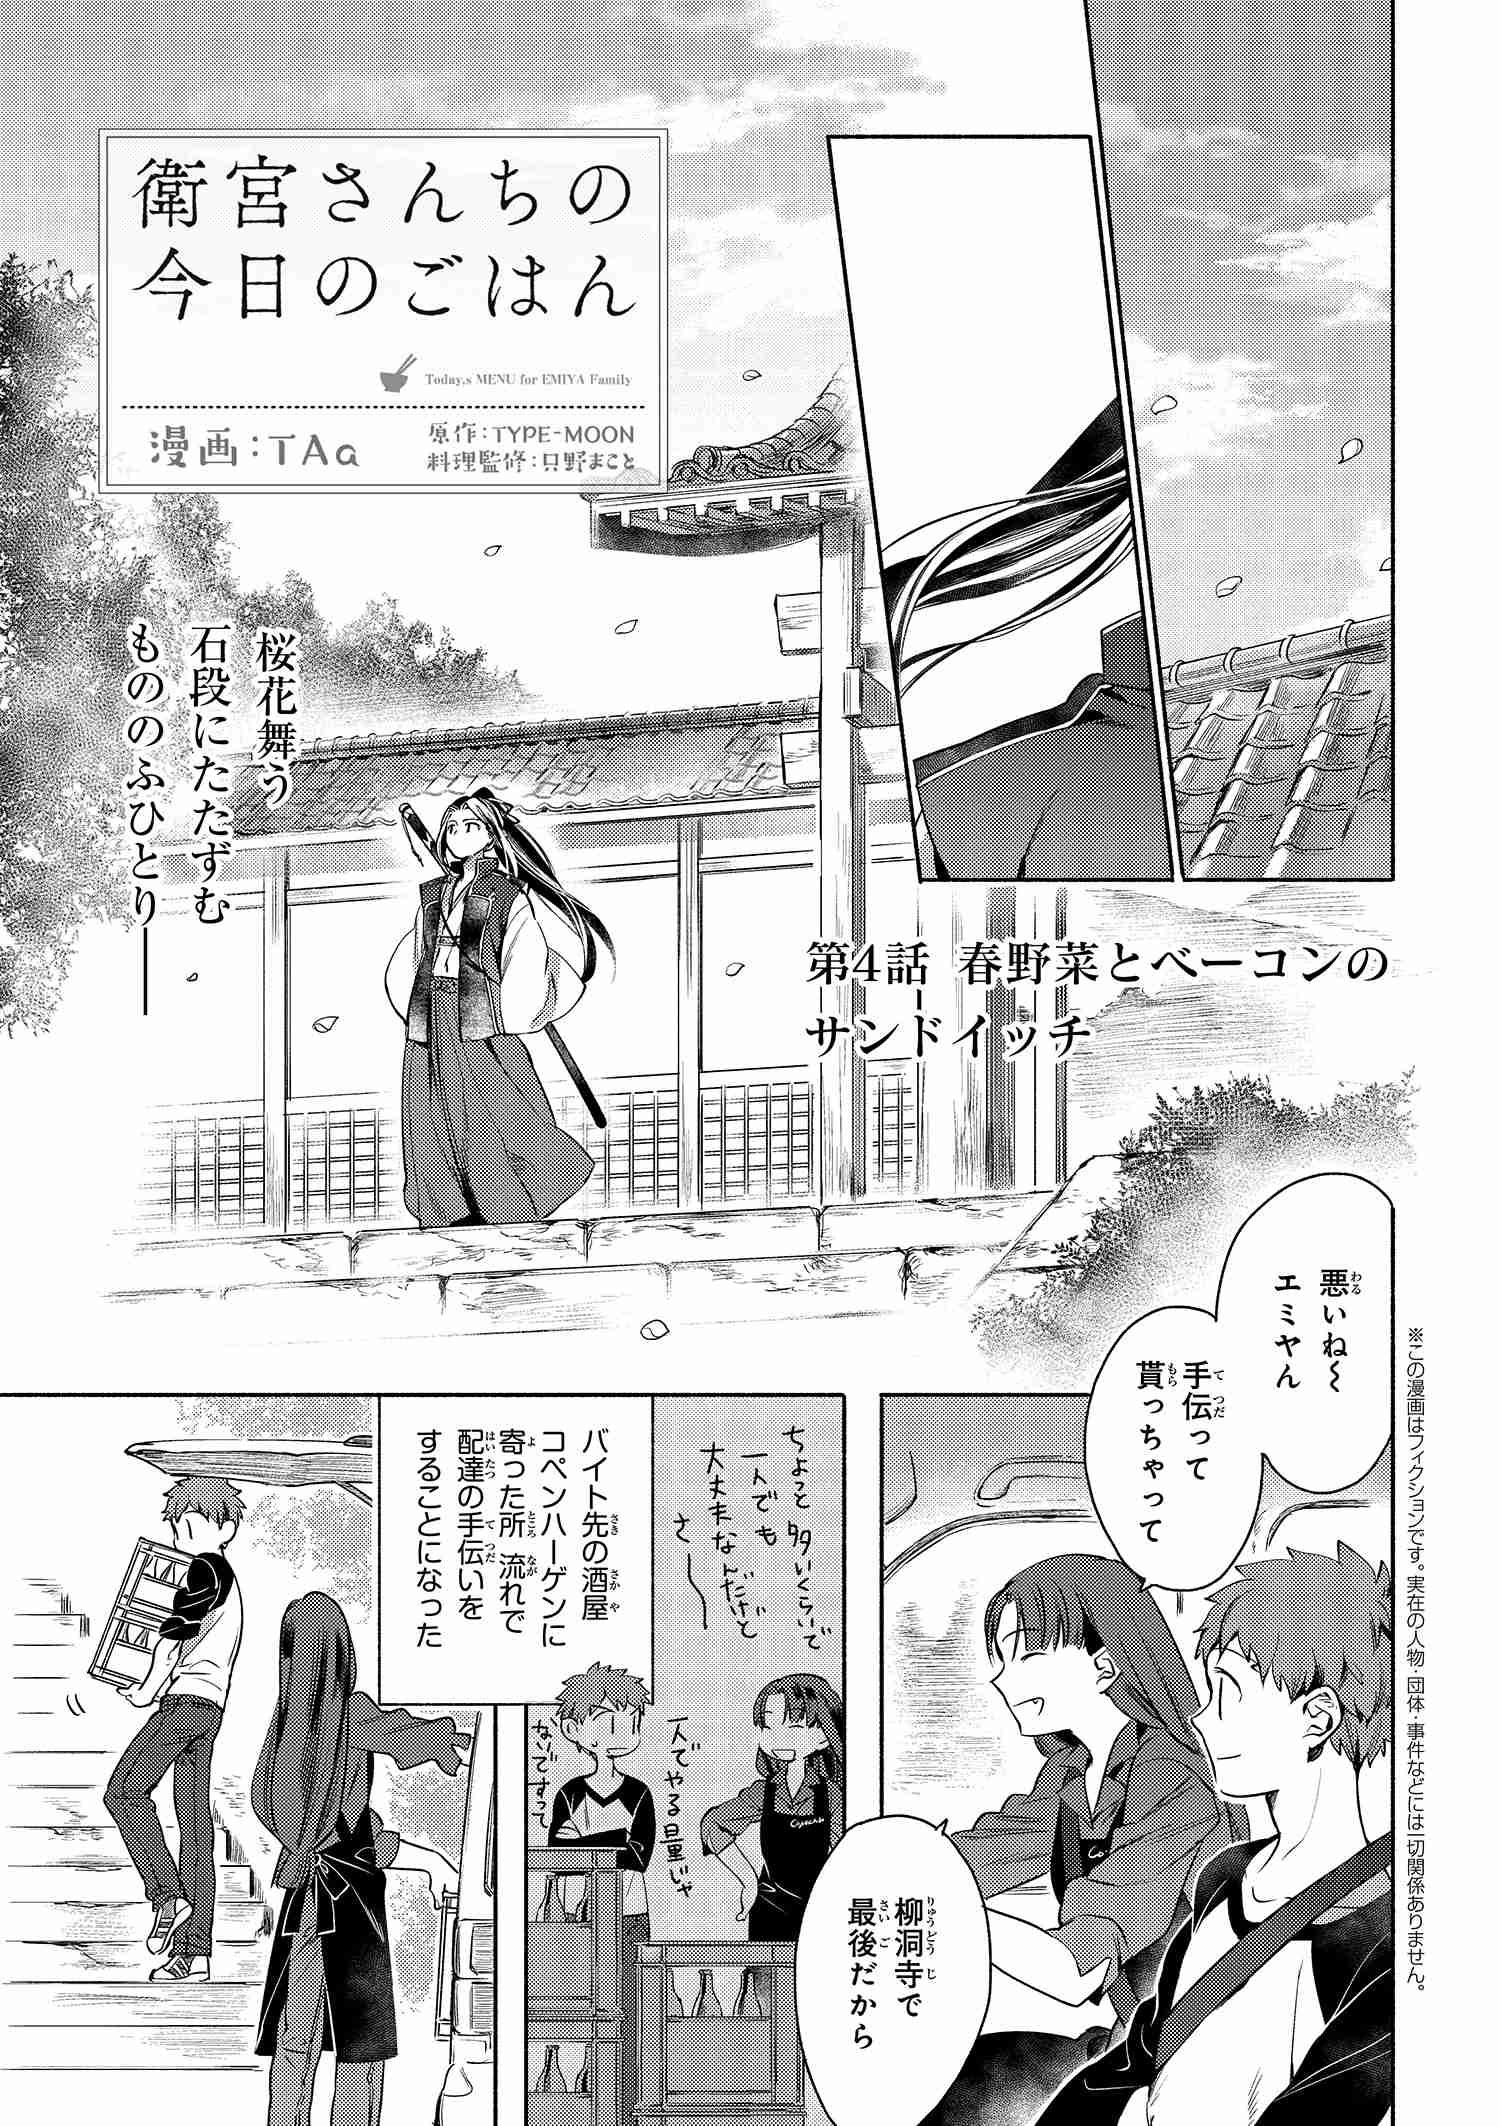 Emiya-san Chi no Kyou no Gohan - Chapter 4 - Page 1